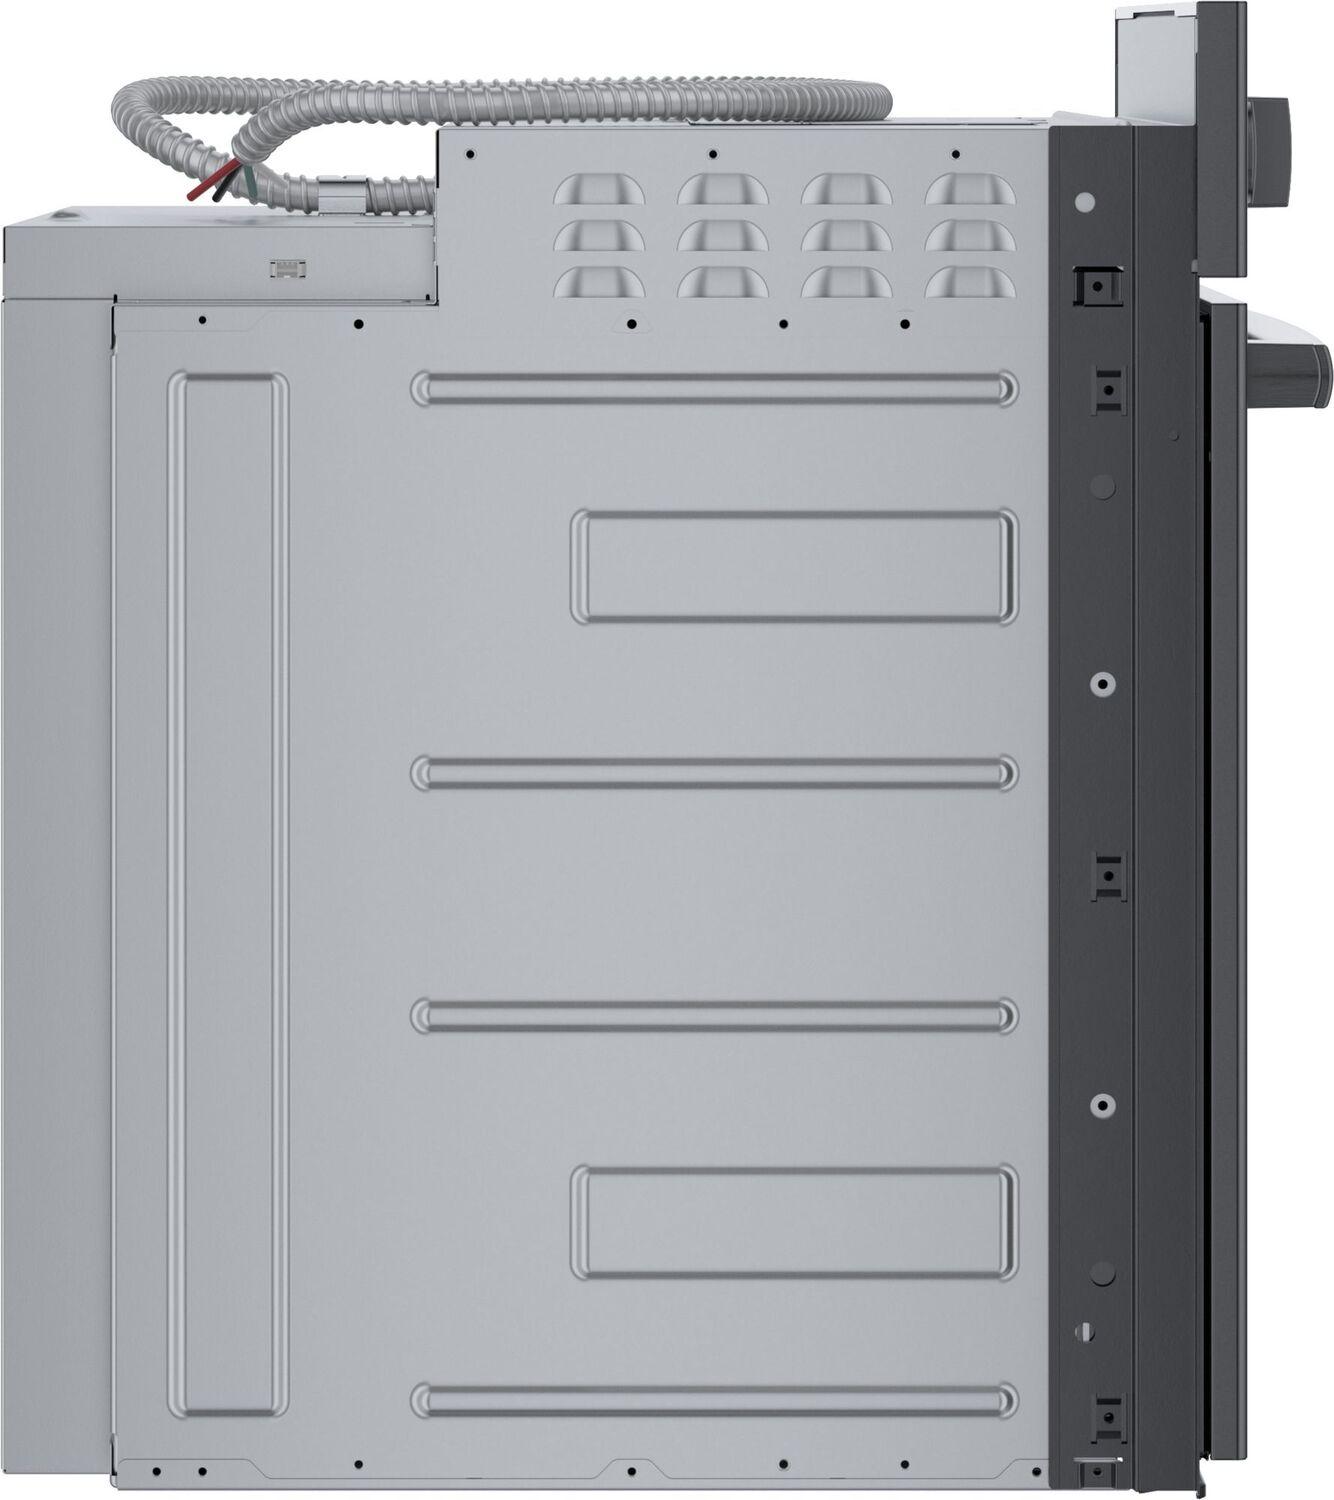 Bosch HBL5344UC 500 Series Single Wall Oven 30'' Stainless Steel Hbl5344Uc